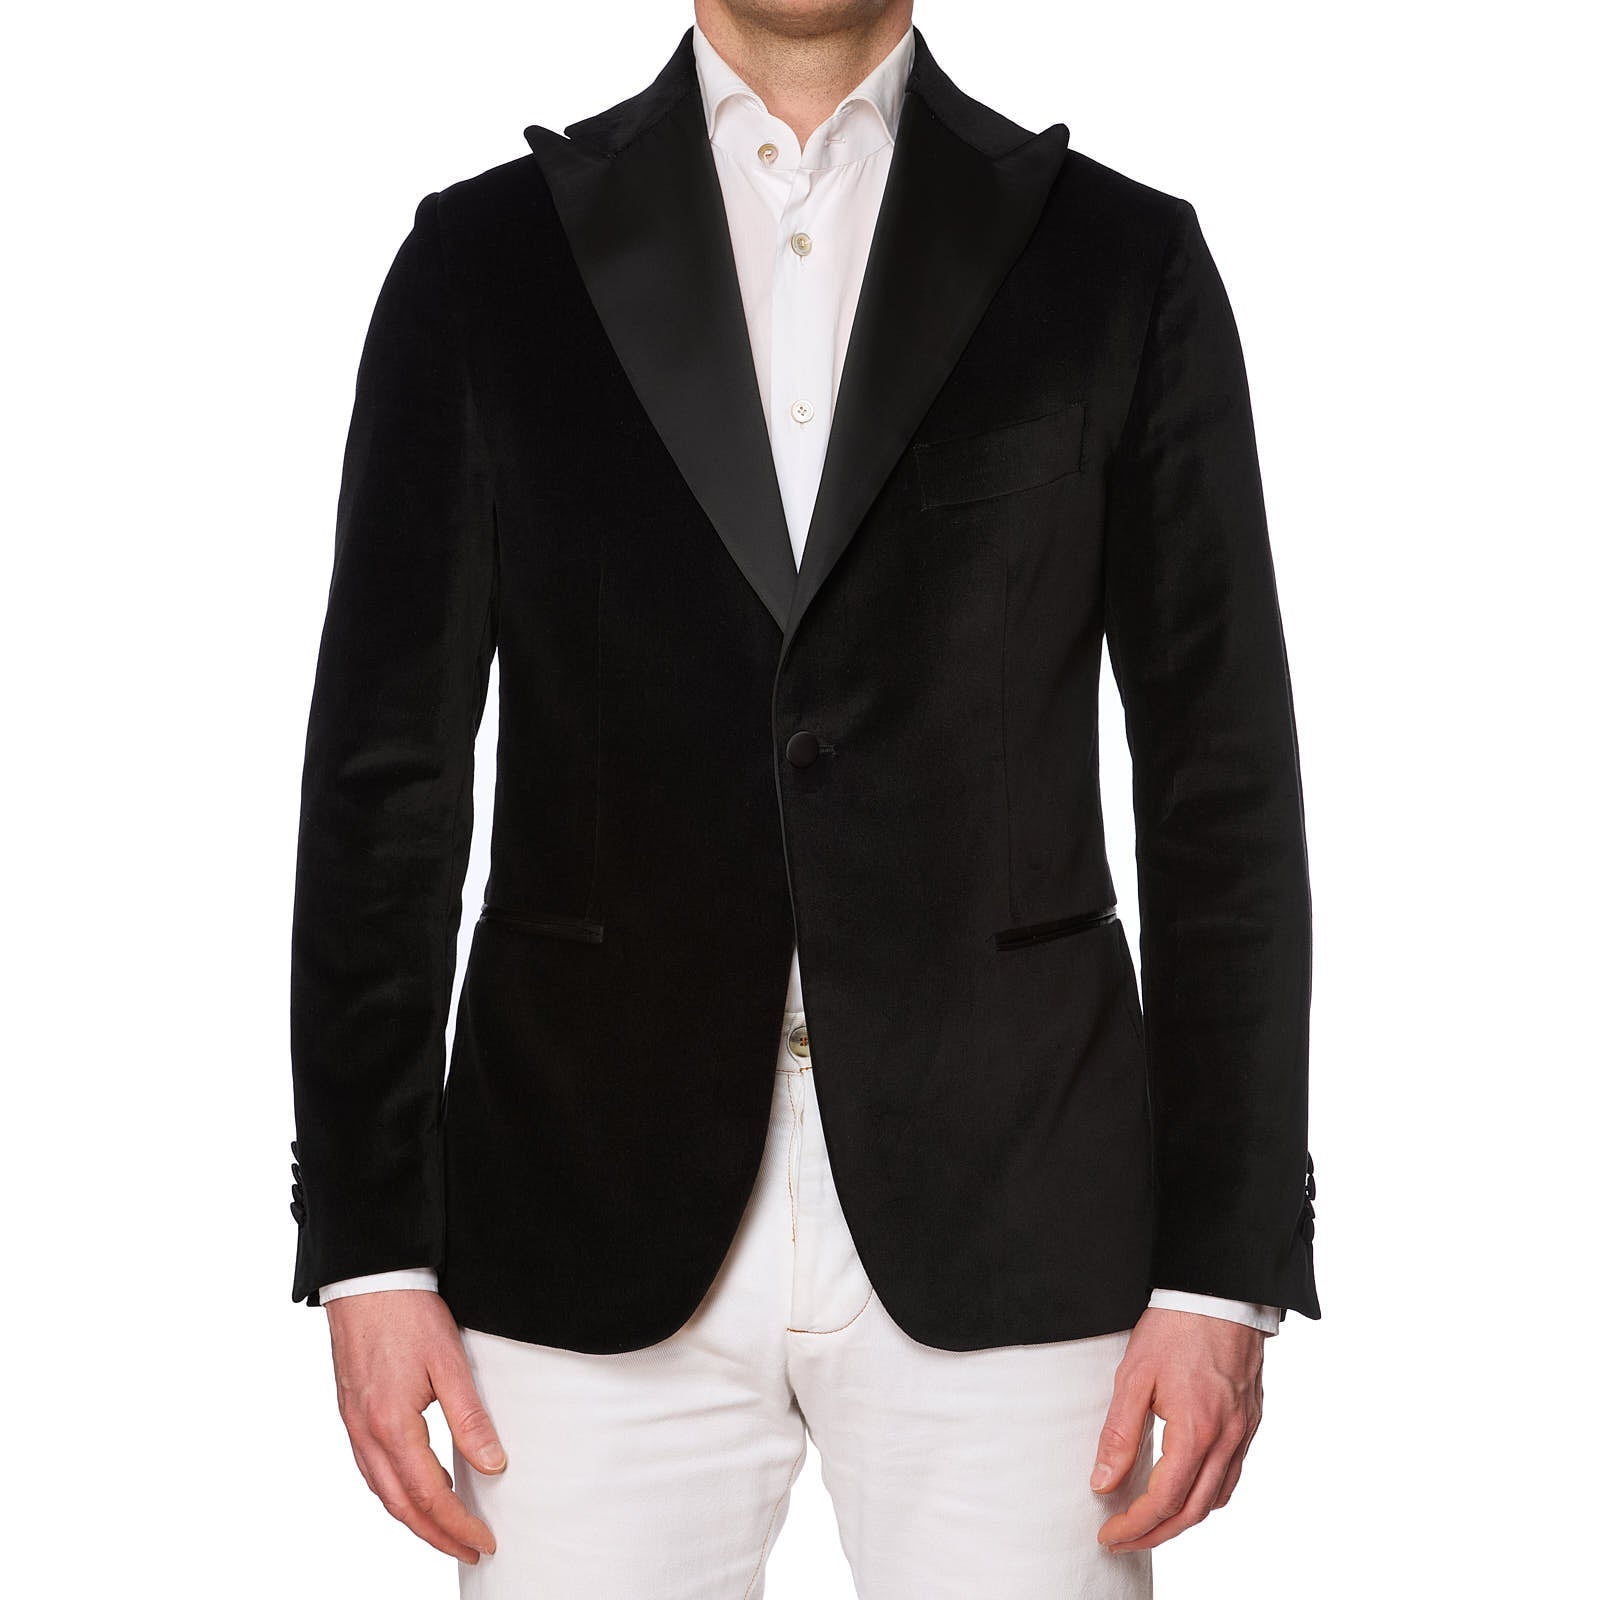 SARTORIA PARTENOPEA Black Cotton Velvet Tuxedo Peak Lapel Jacket NEW Current Model